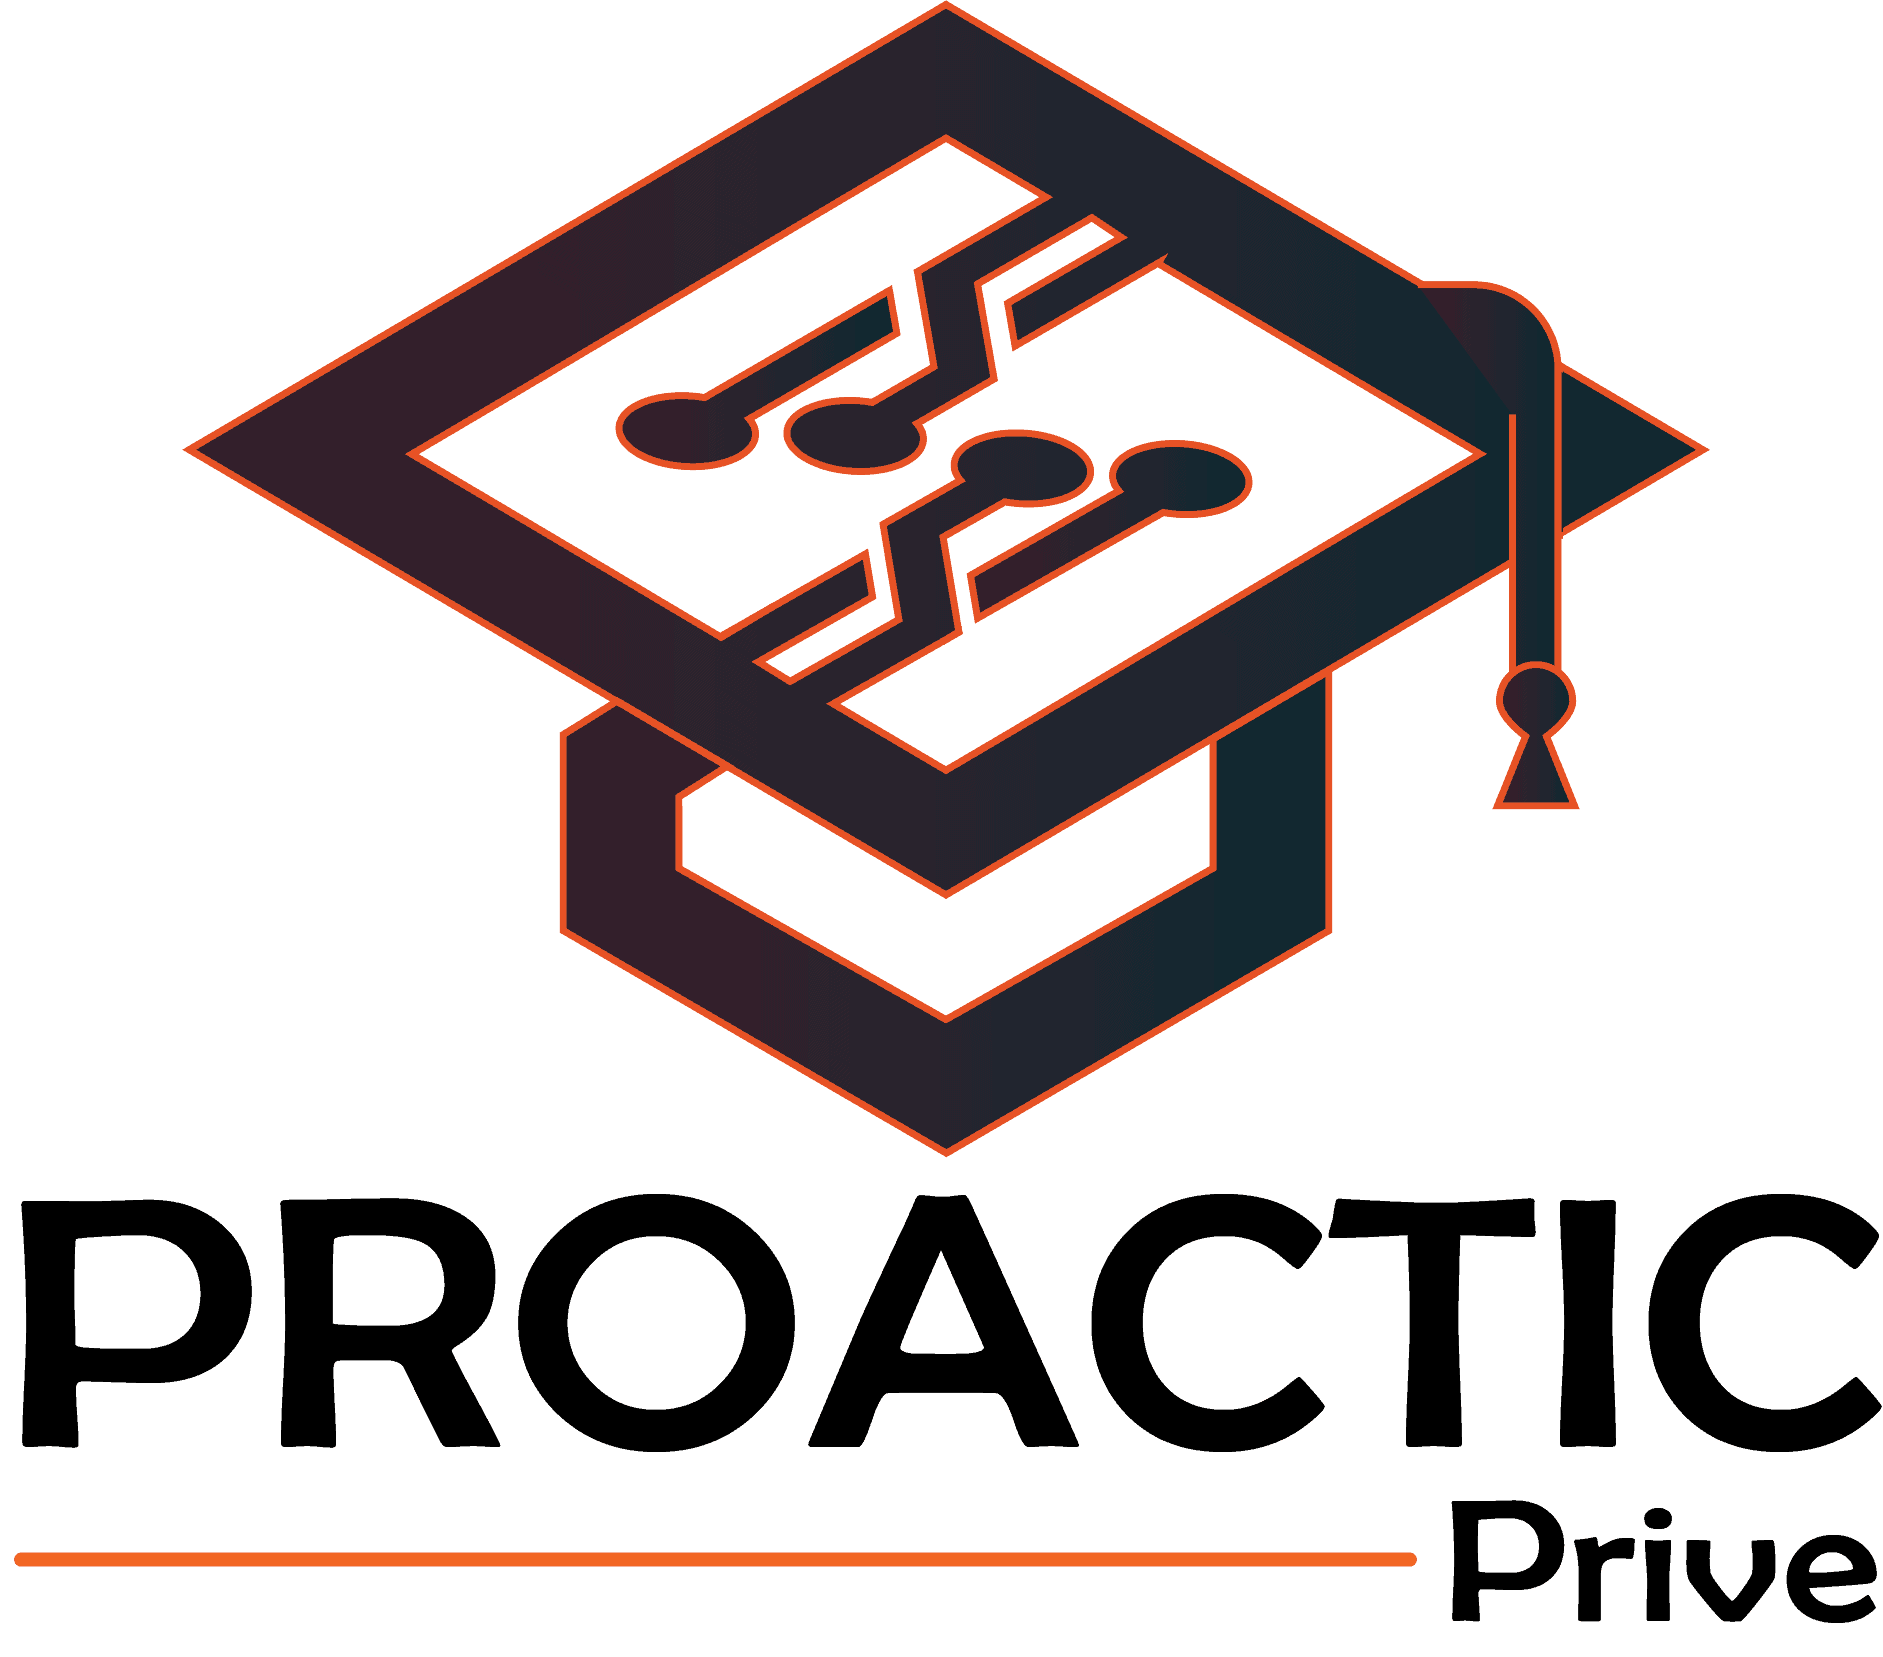 Proactic Prive